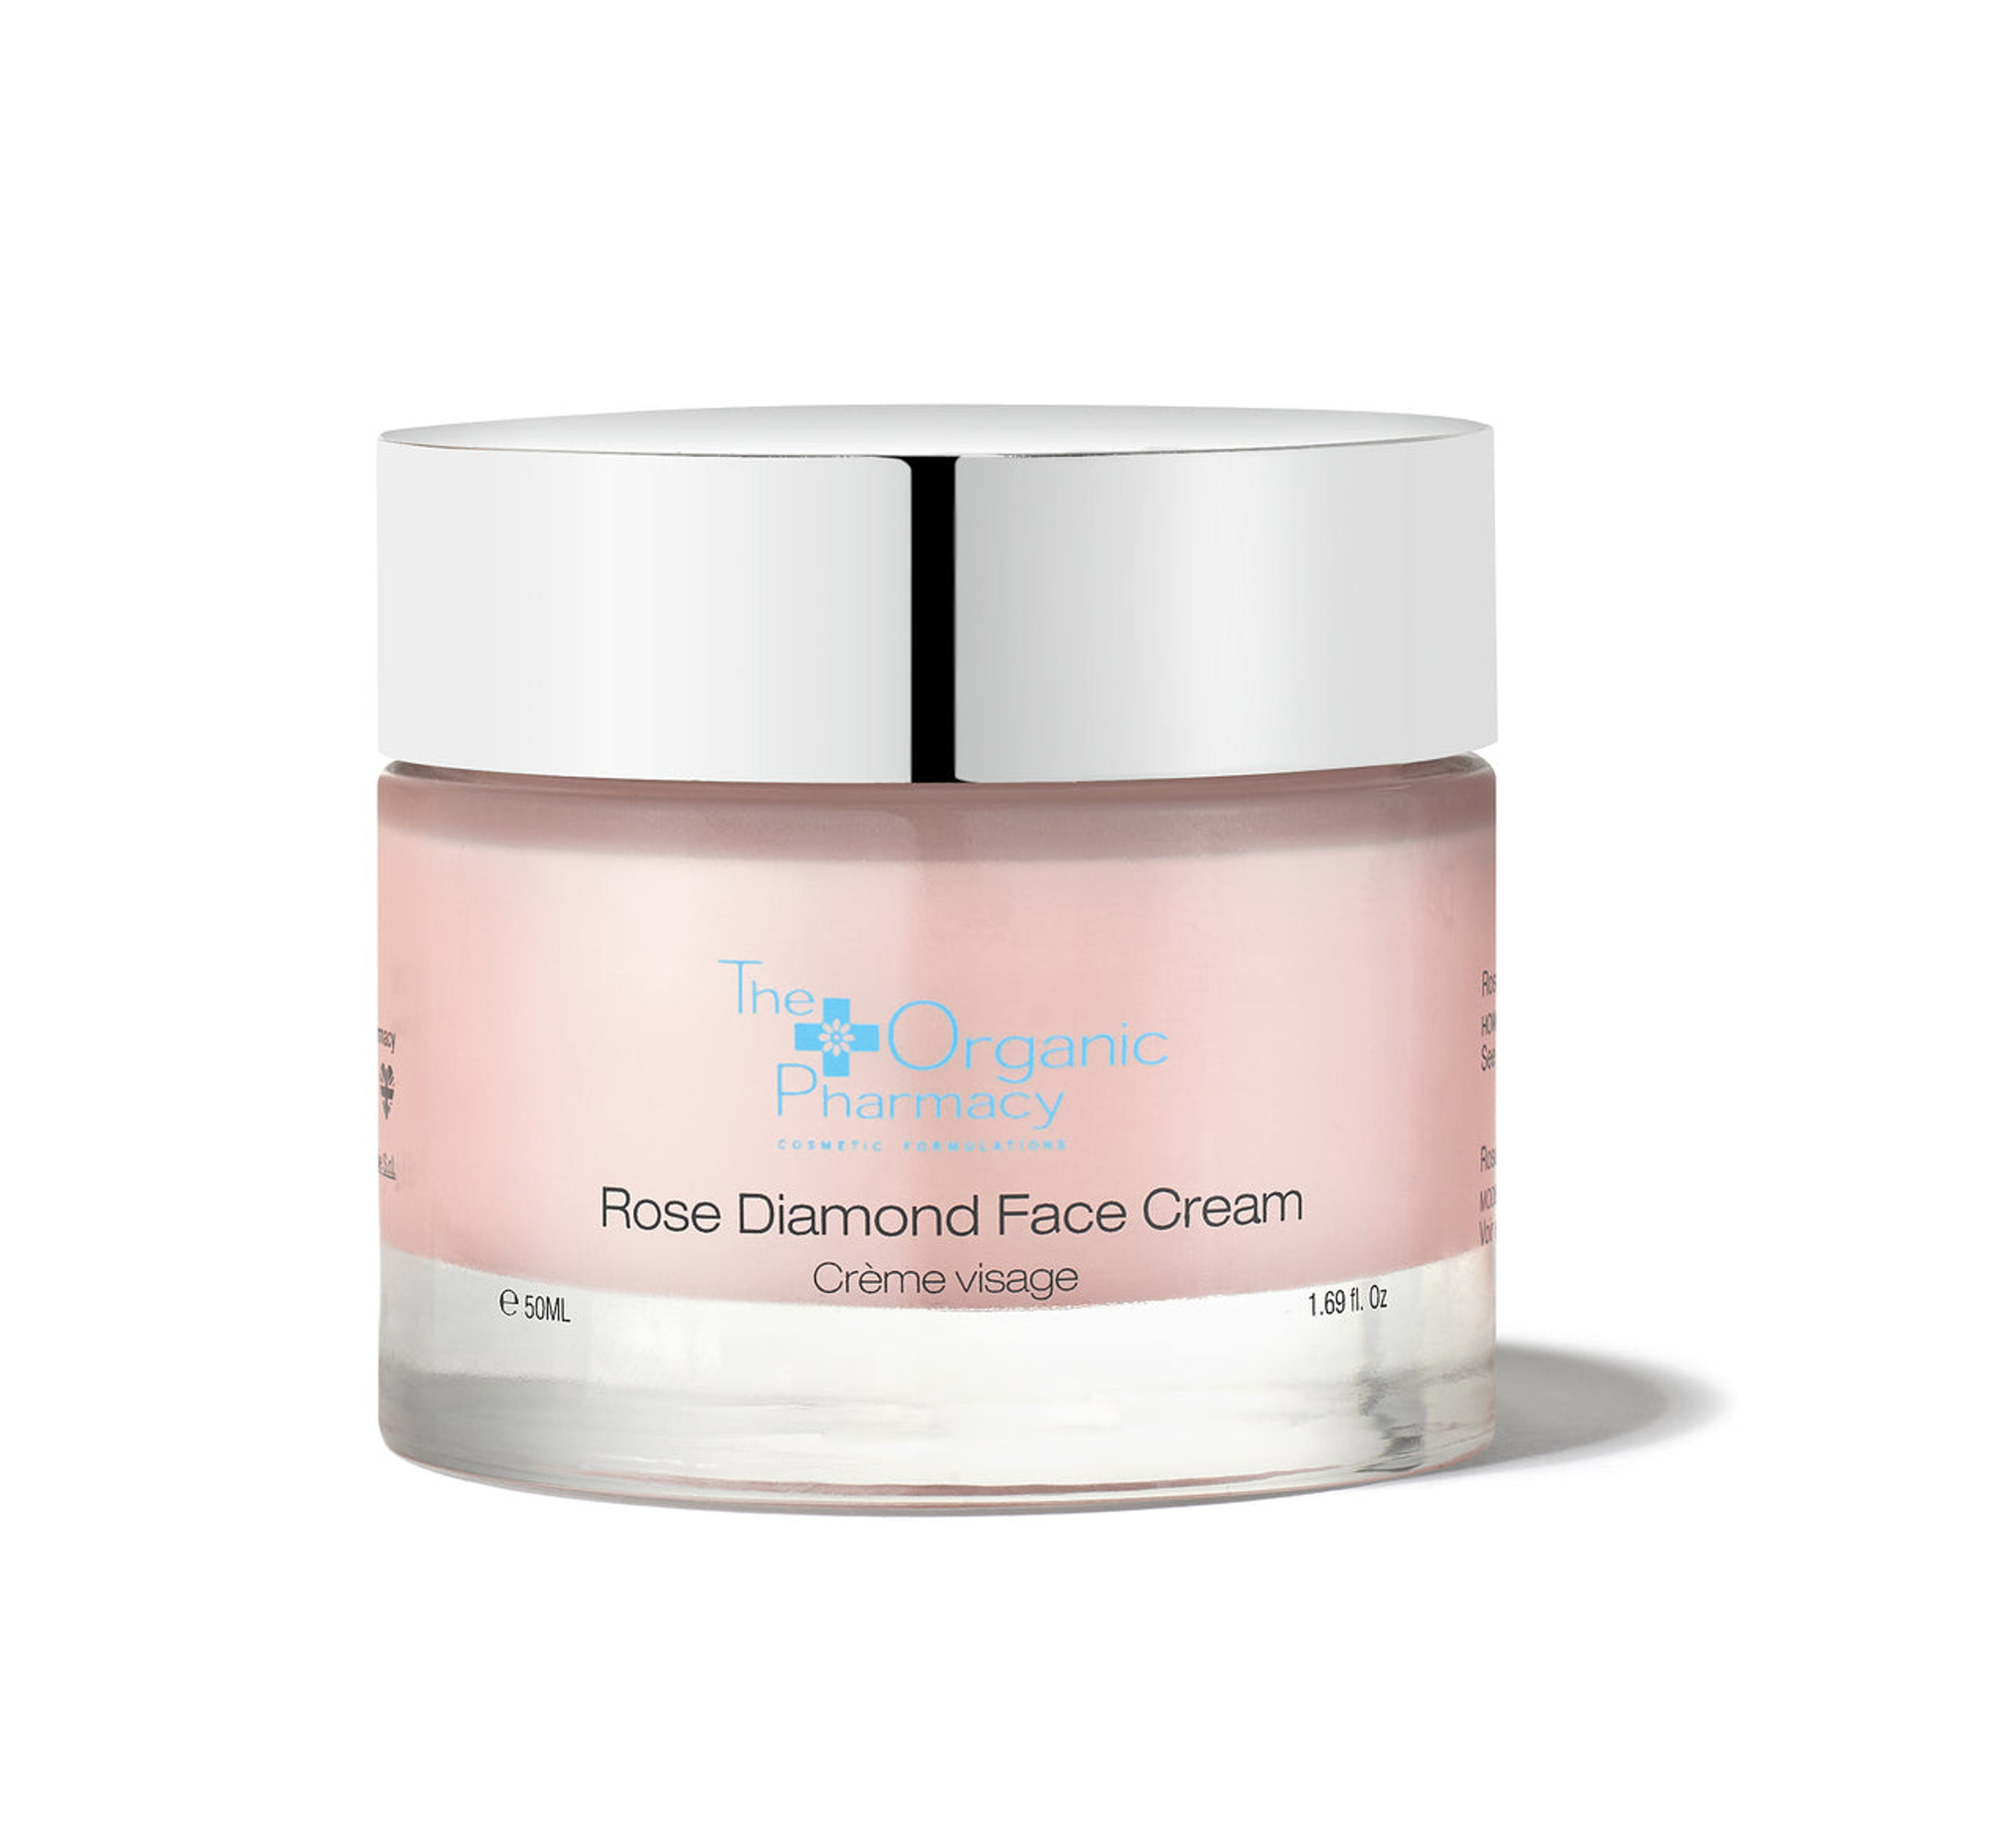  Rose Diamond Face Cream